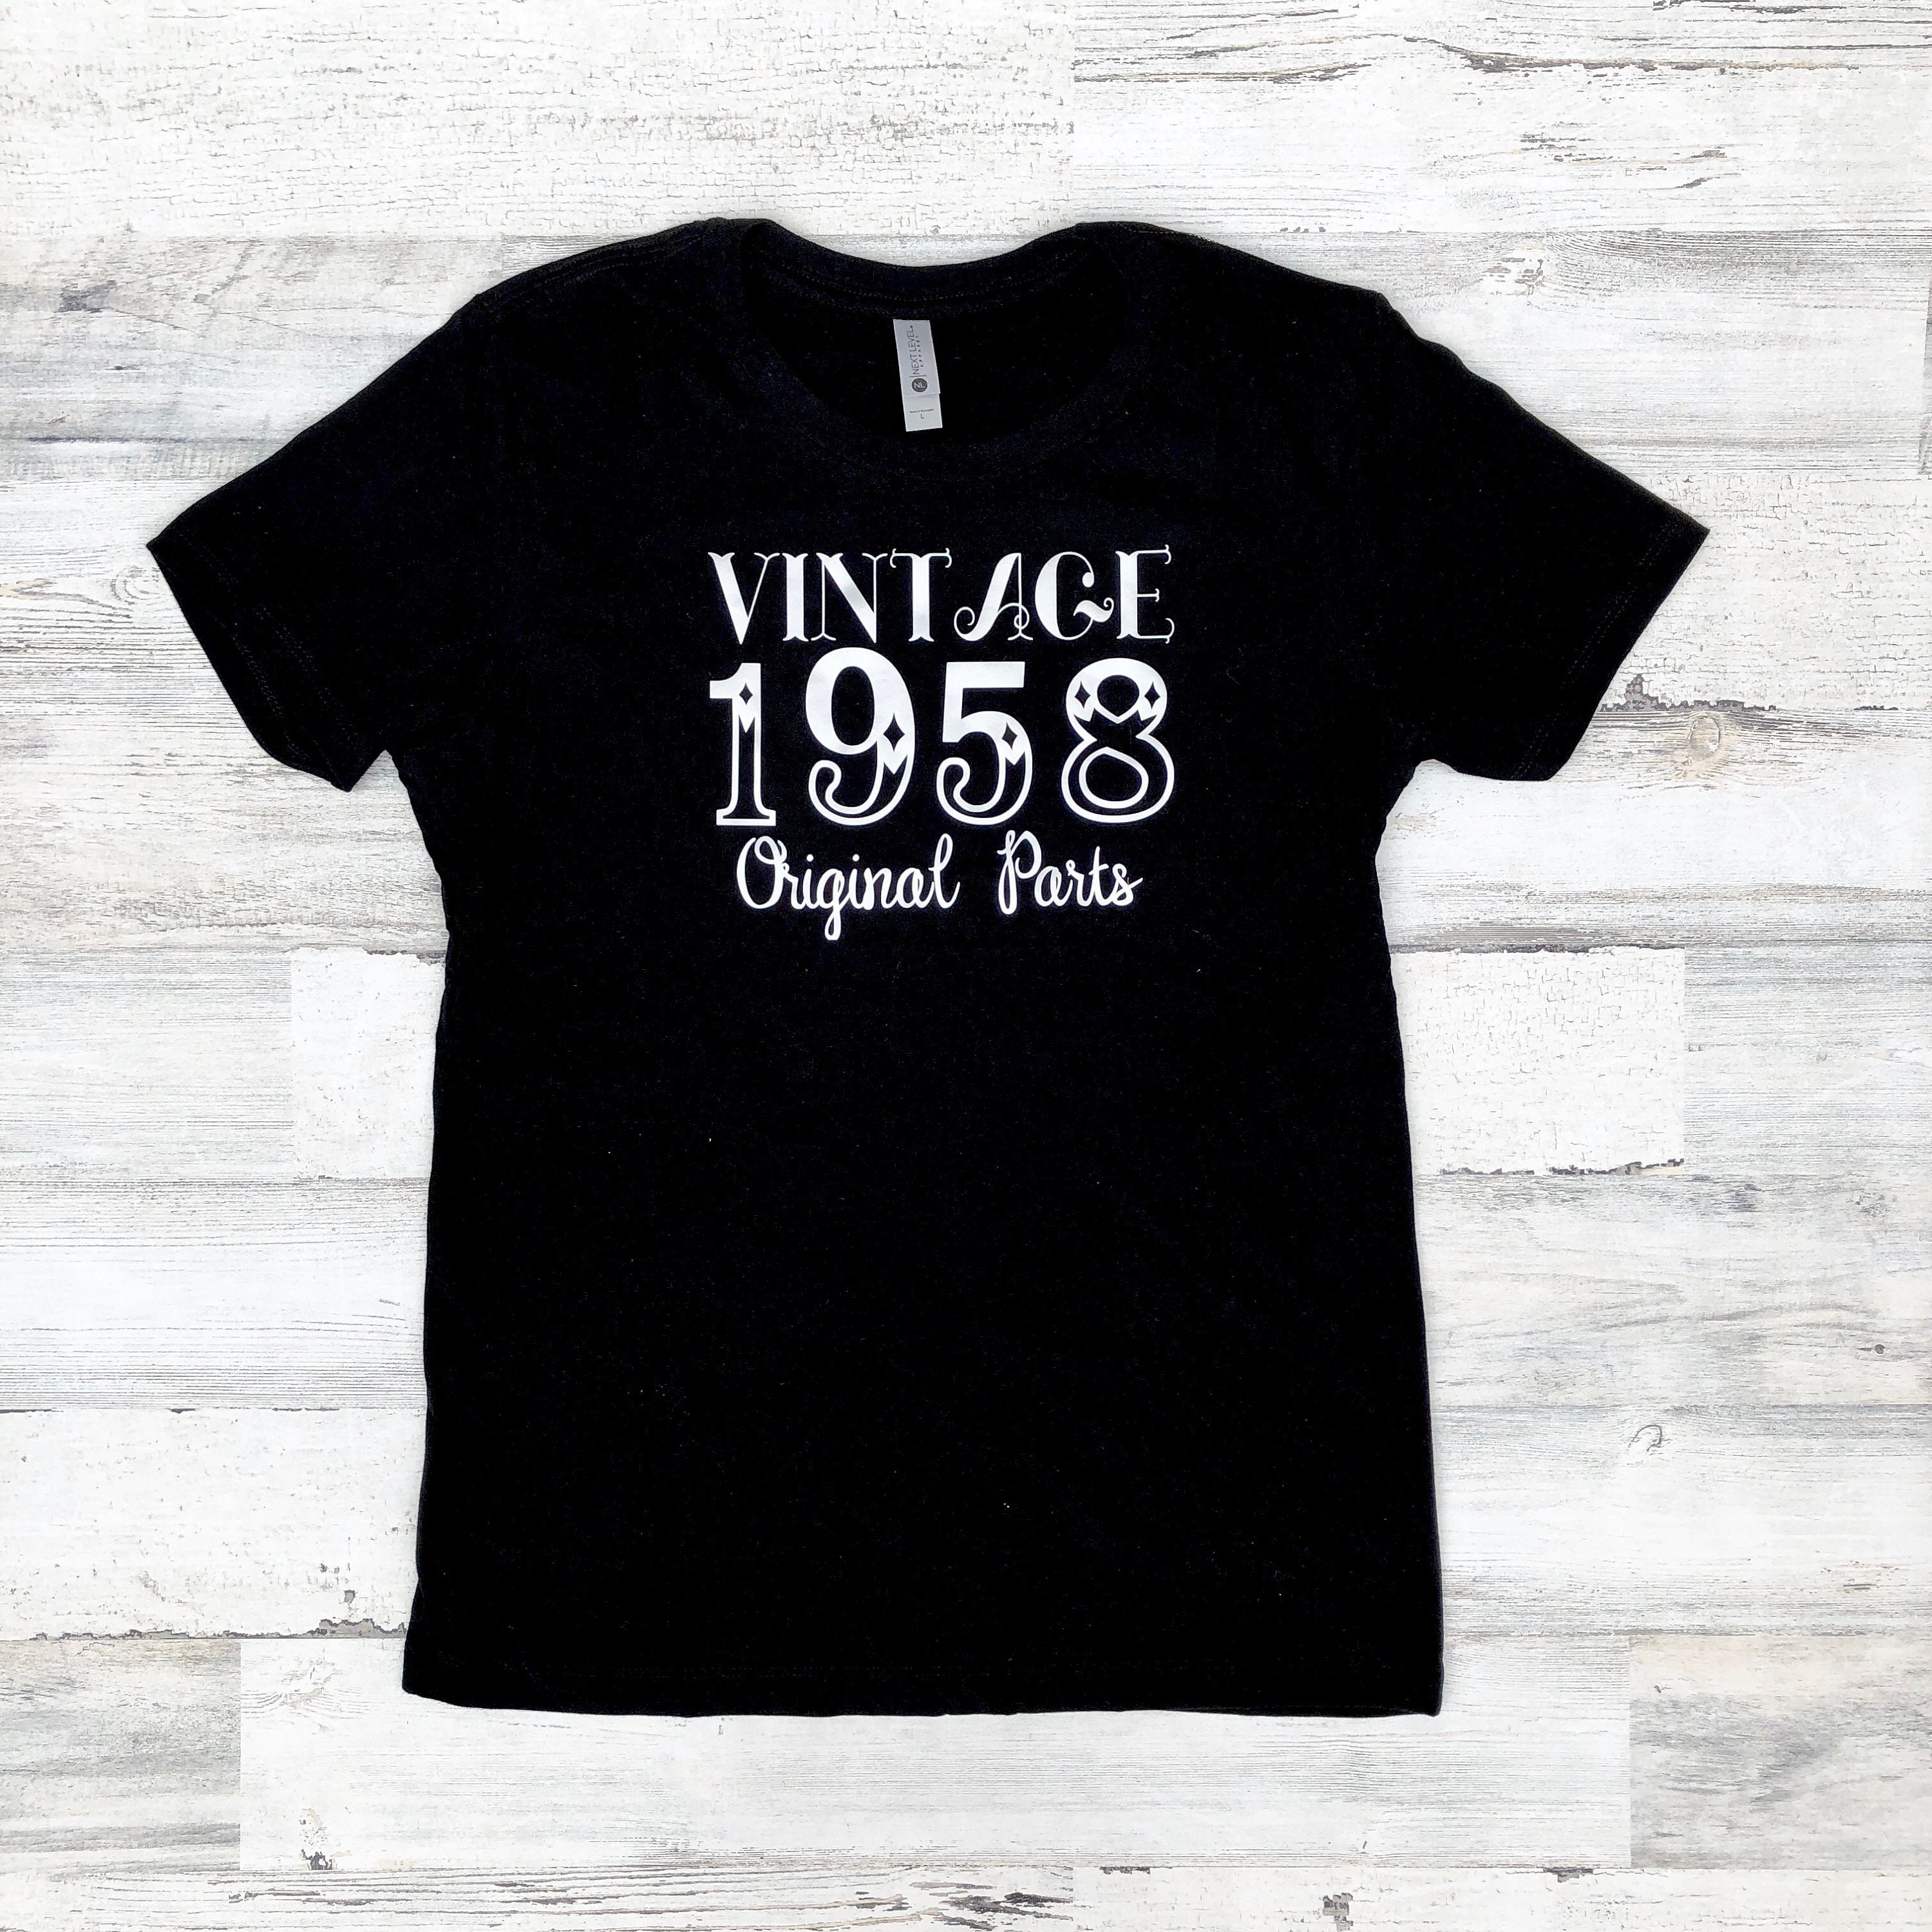 Vintage Birthday Shirt - Original Parts - Funny Birthday Shirt Idea